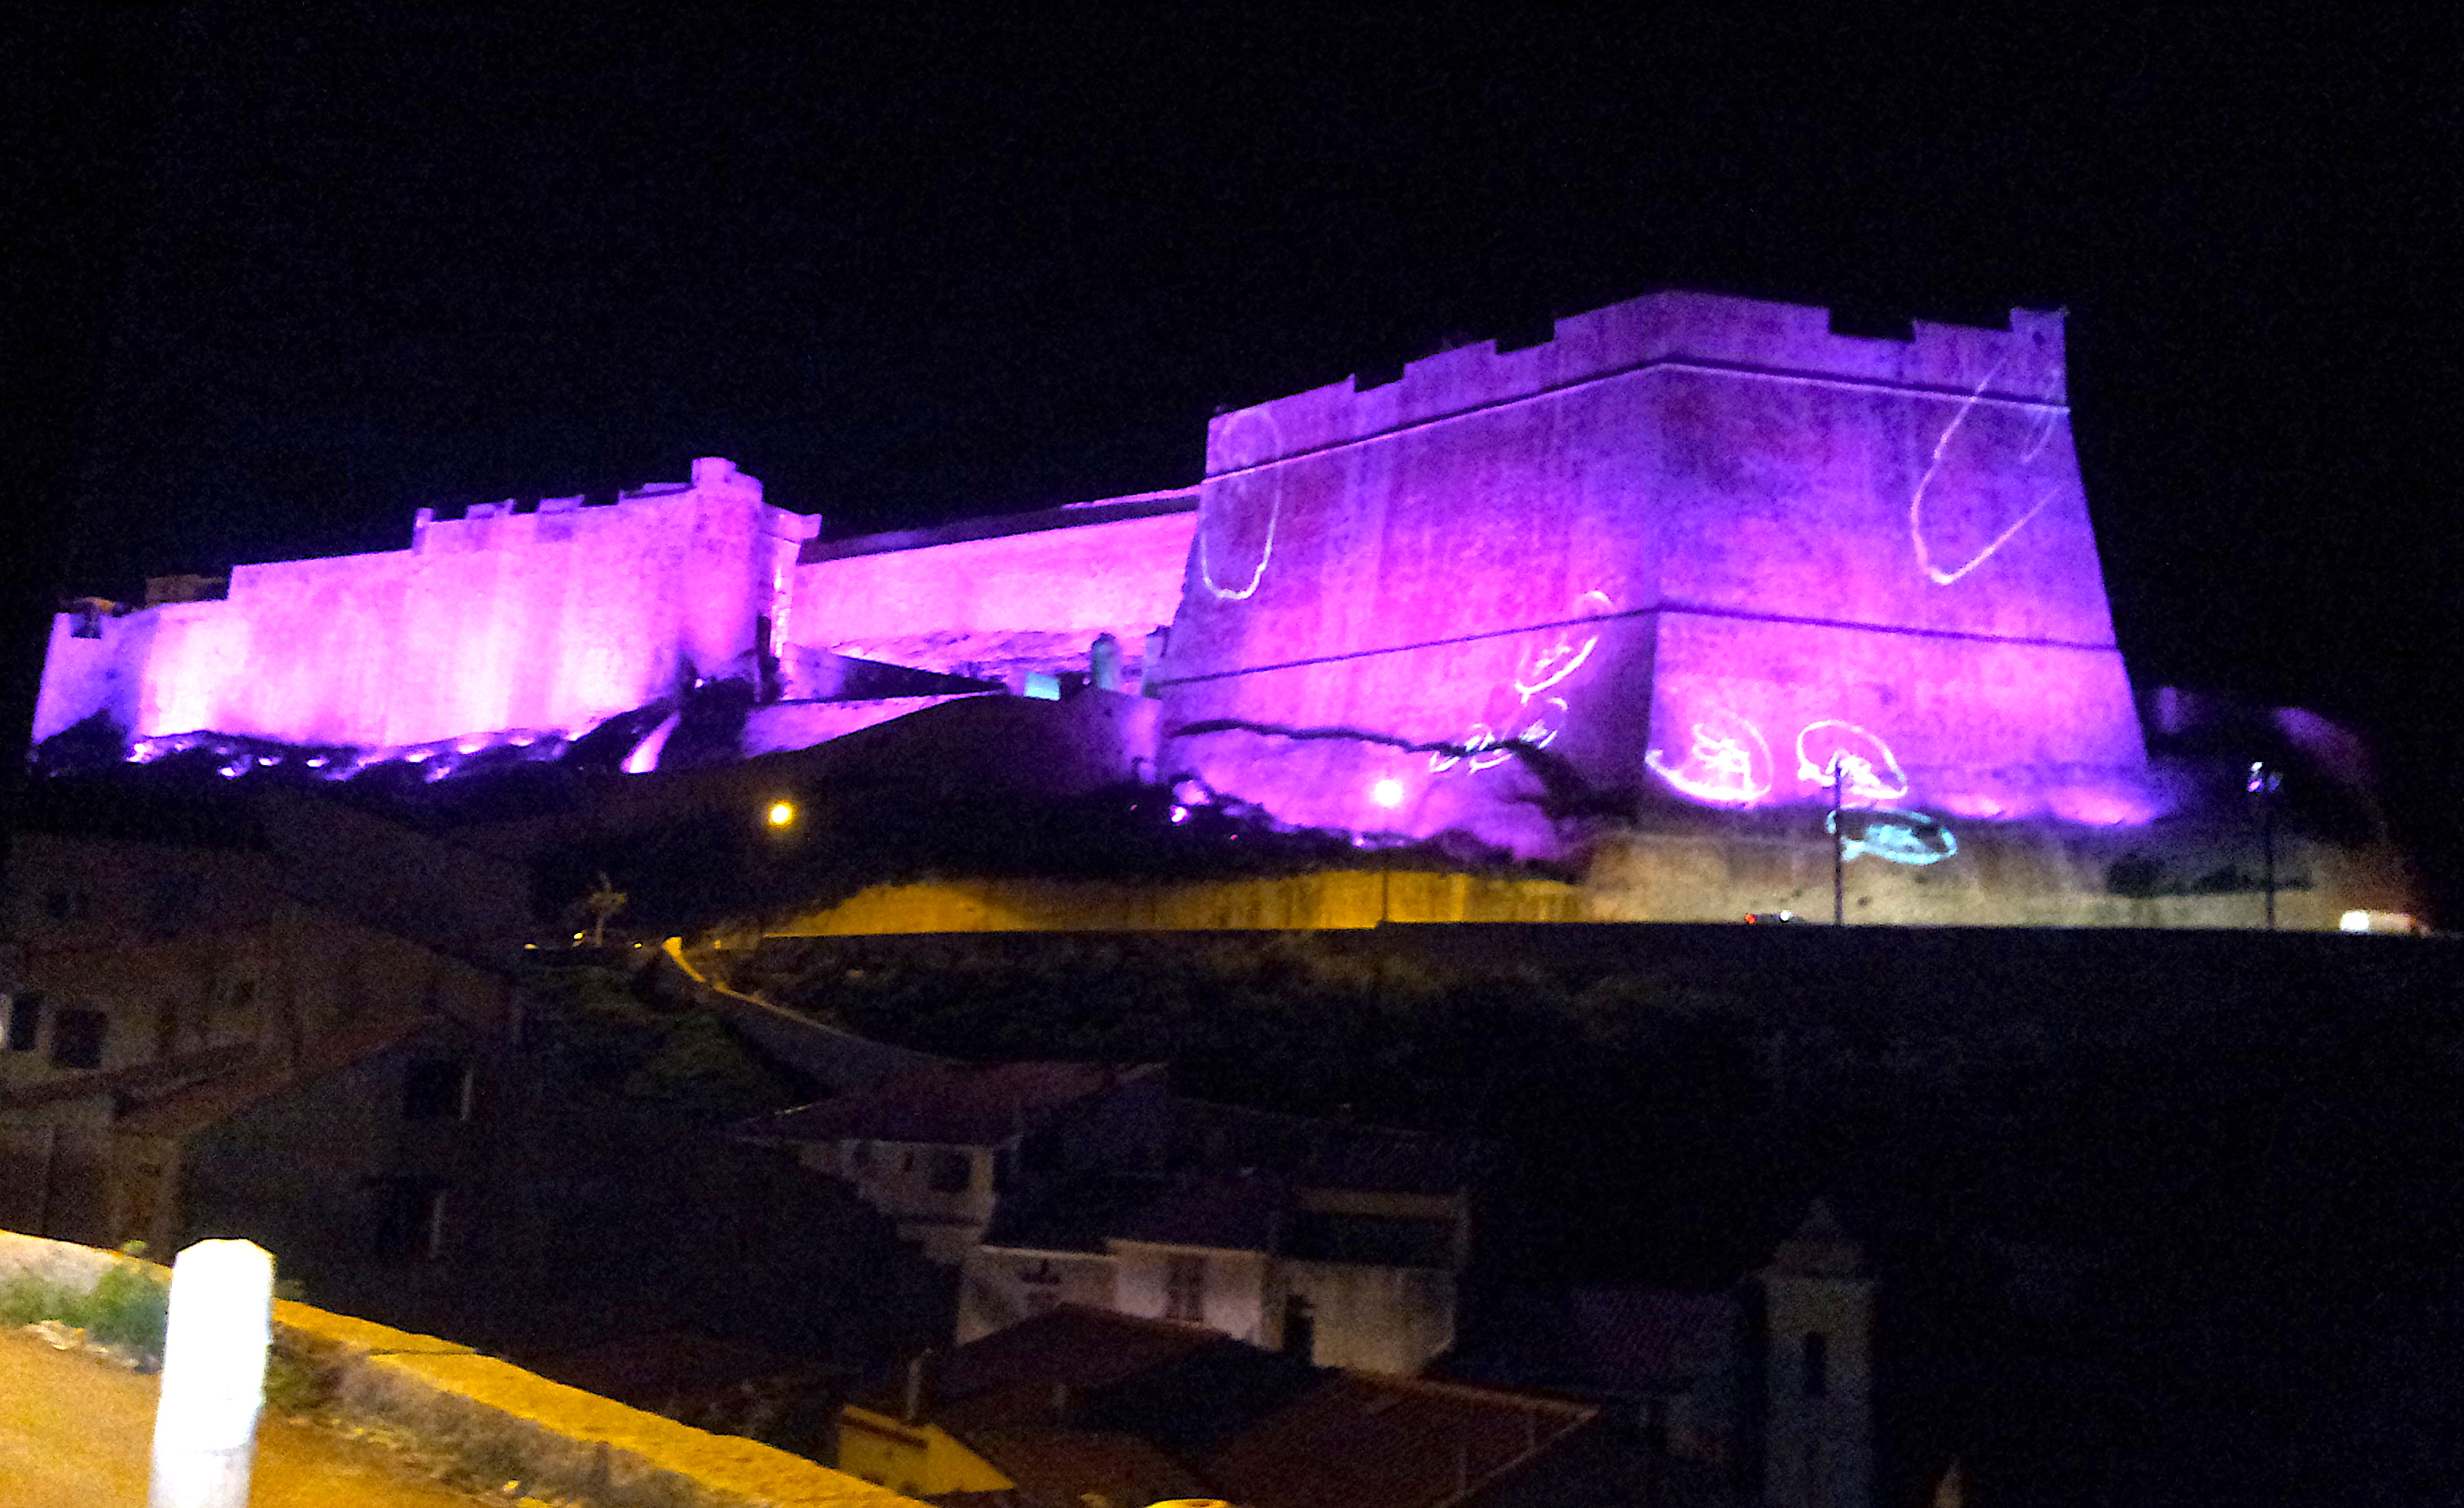 La photo du jour : La Citadelle de Bonifacio illuminée